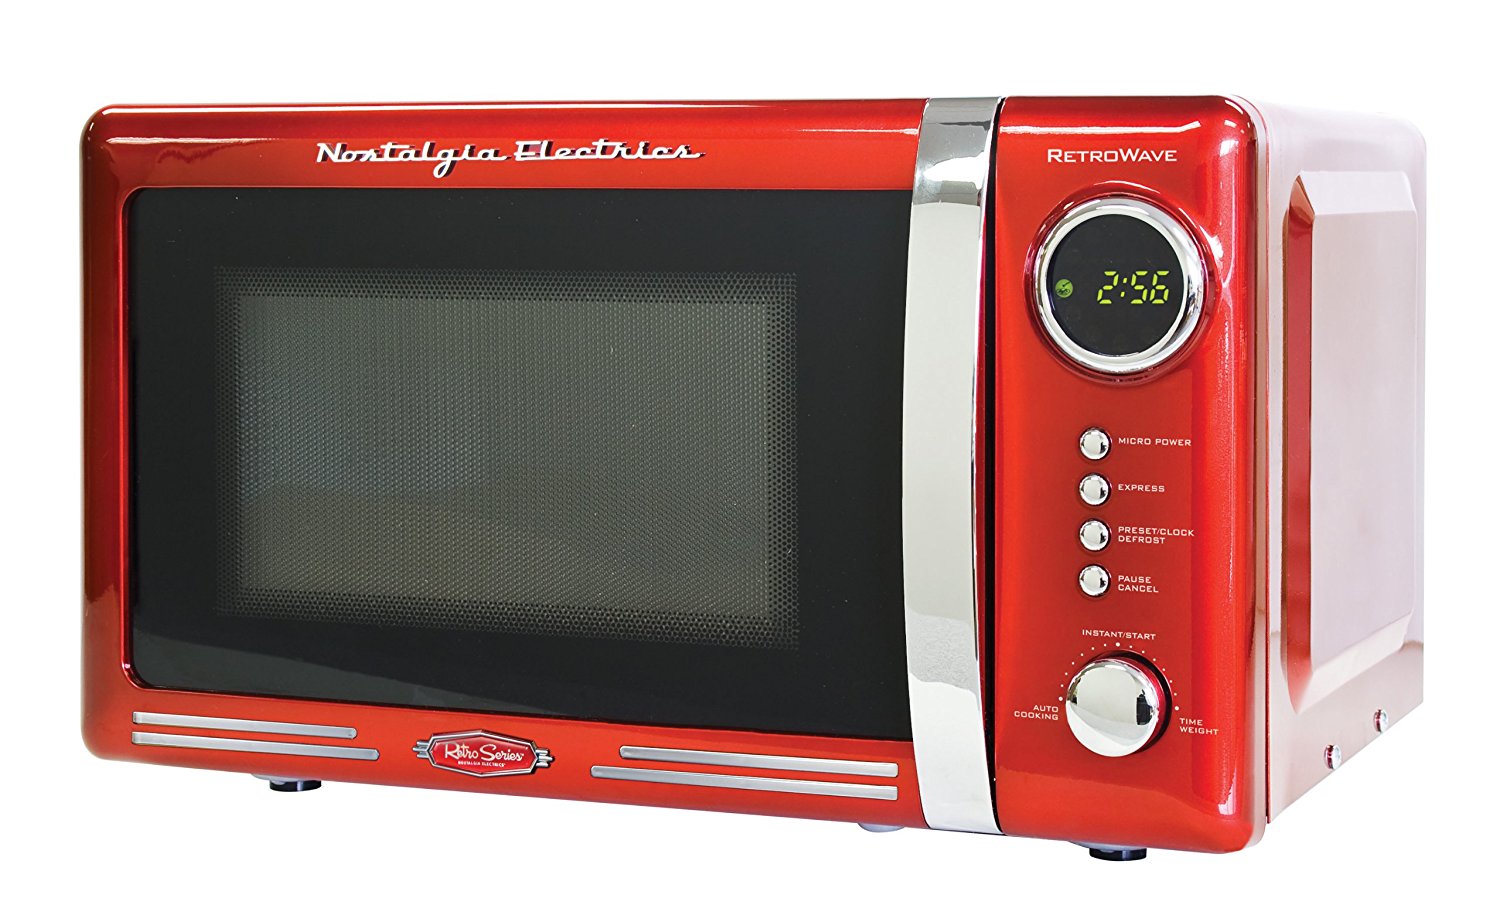 Nostalgia RMO770RED Retro Series 0.7 Cubic Foot 700-Watt Microwave Oven